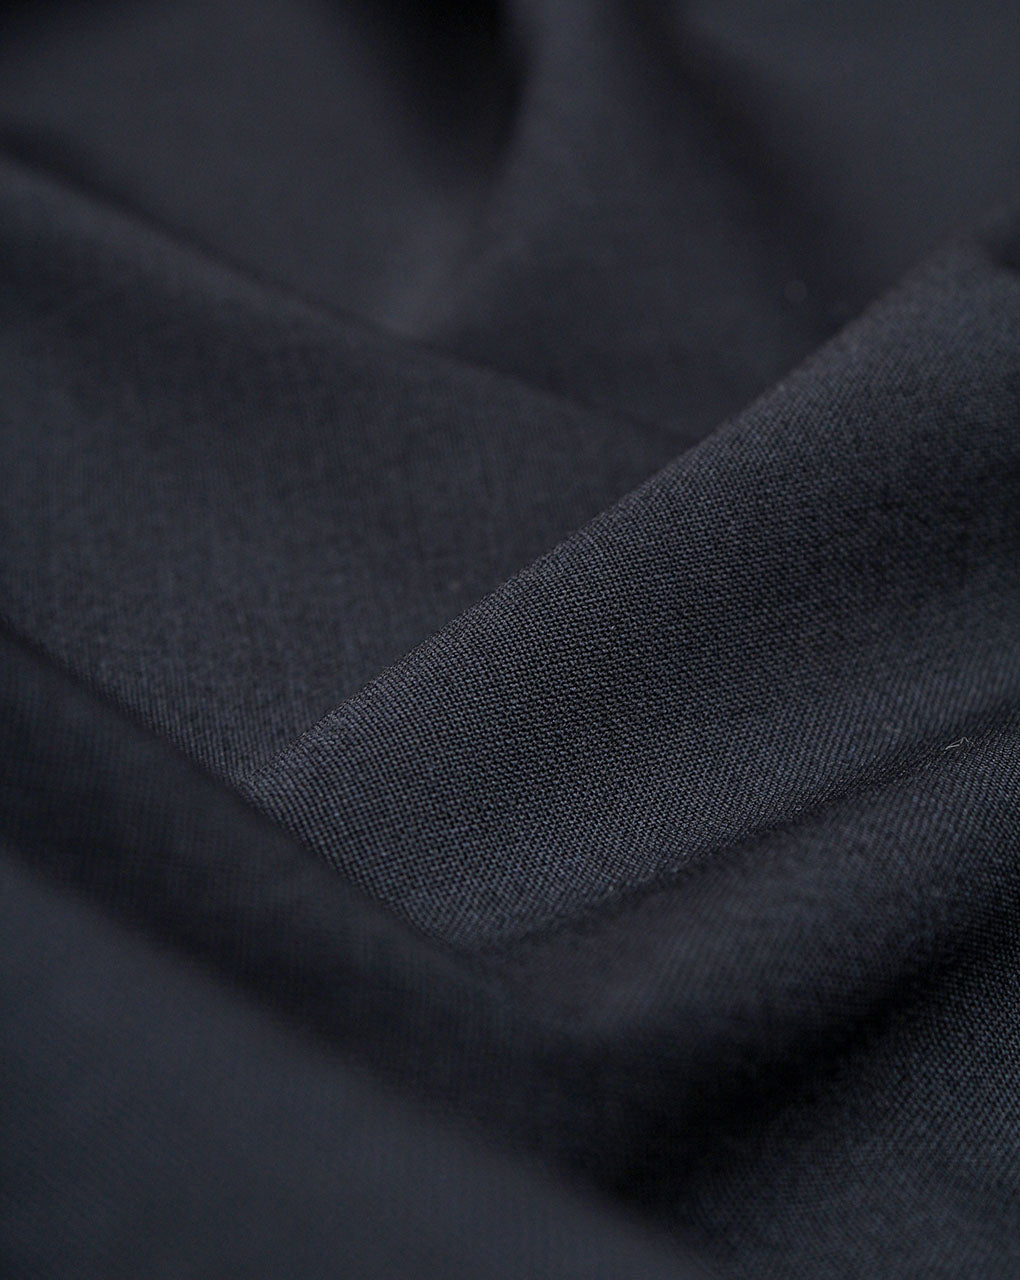 Black Plain Design 2 Woolen Suiting Fabric